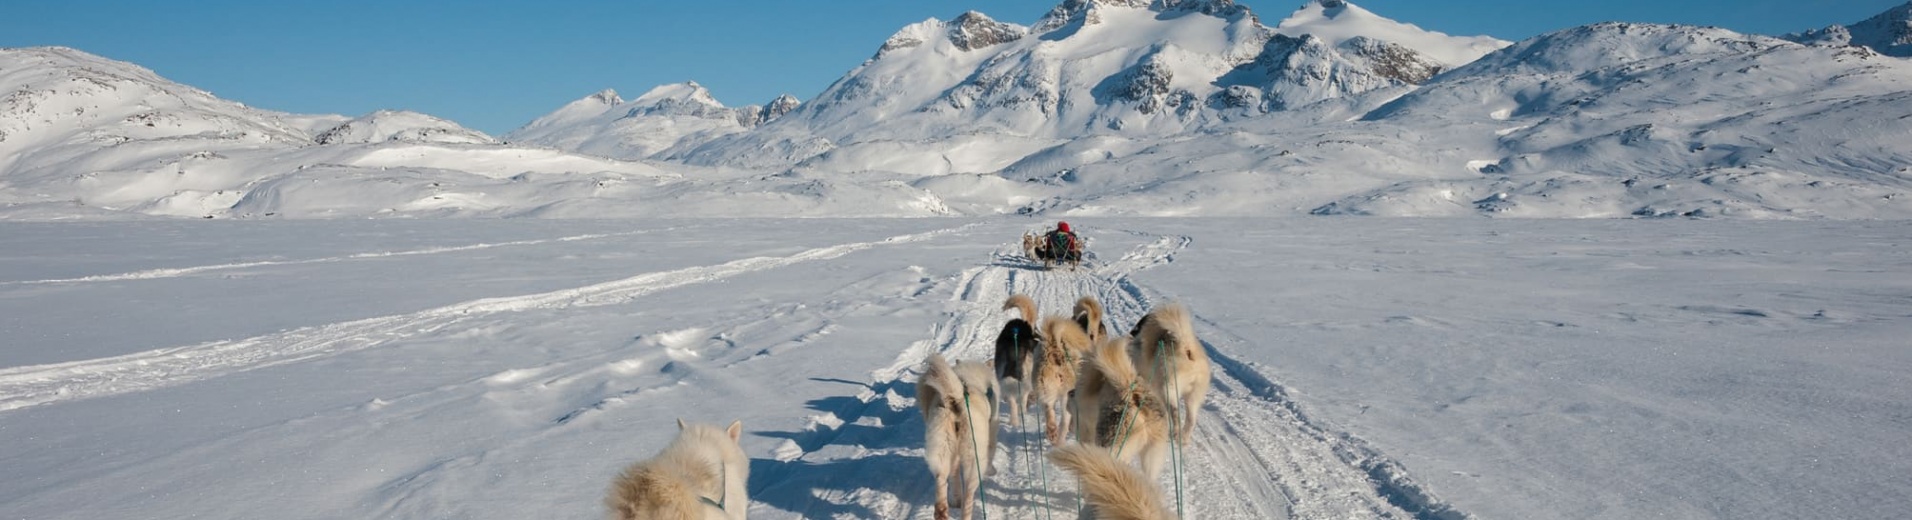 Traineaux chiens Groenland